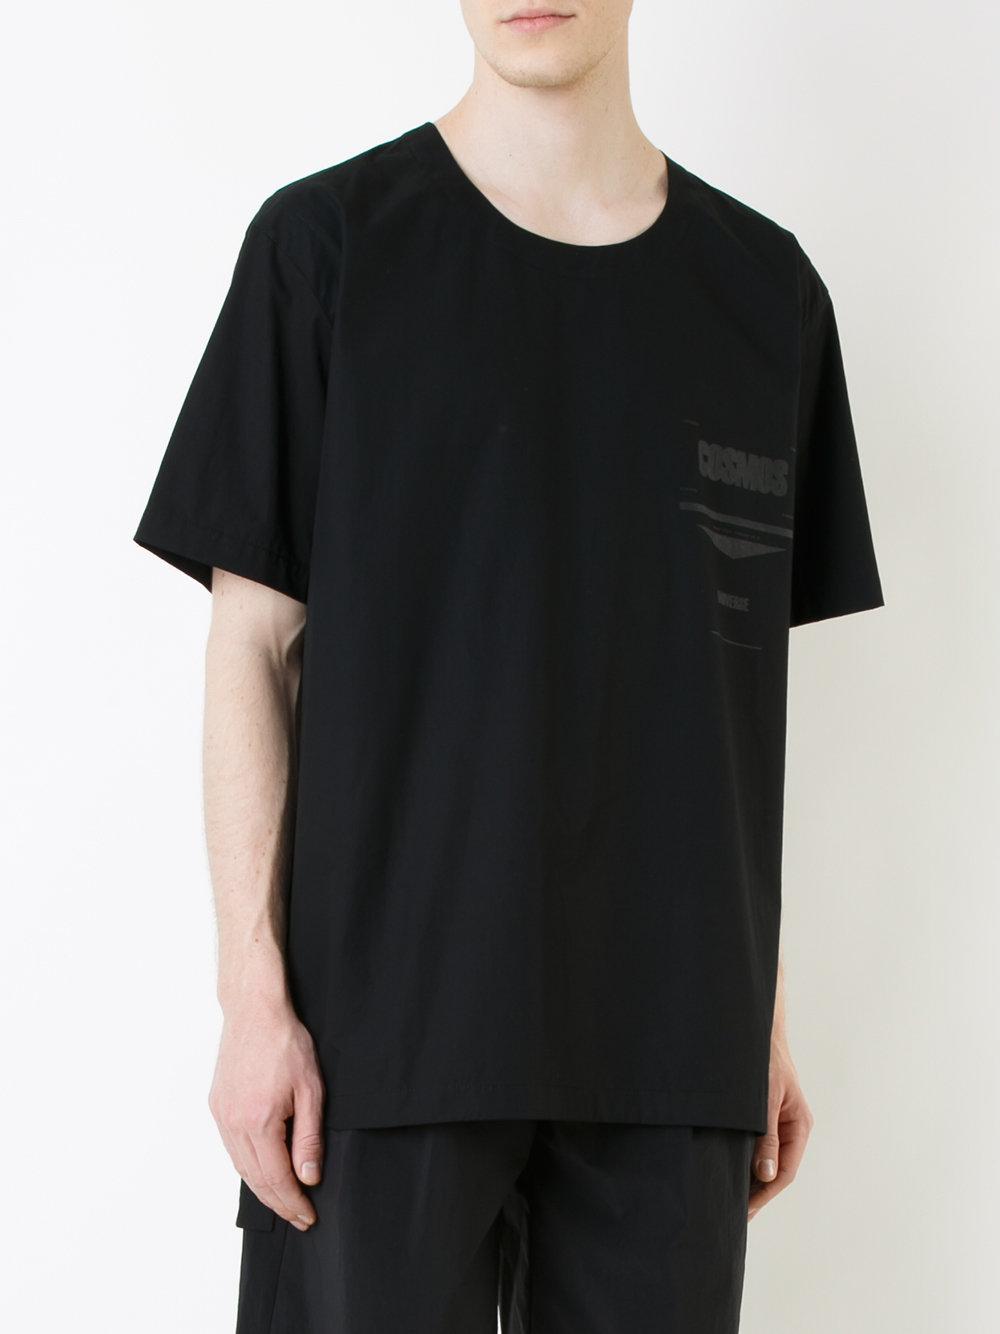 Lyst - General Idea Tonal Print T-shirt in Black for Men